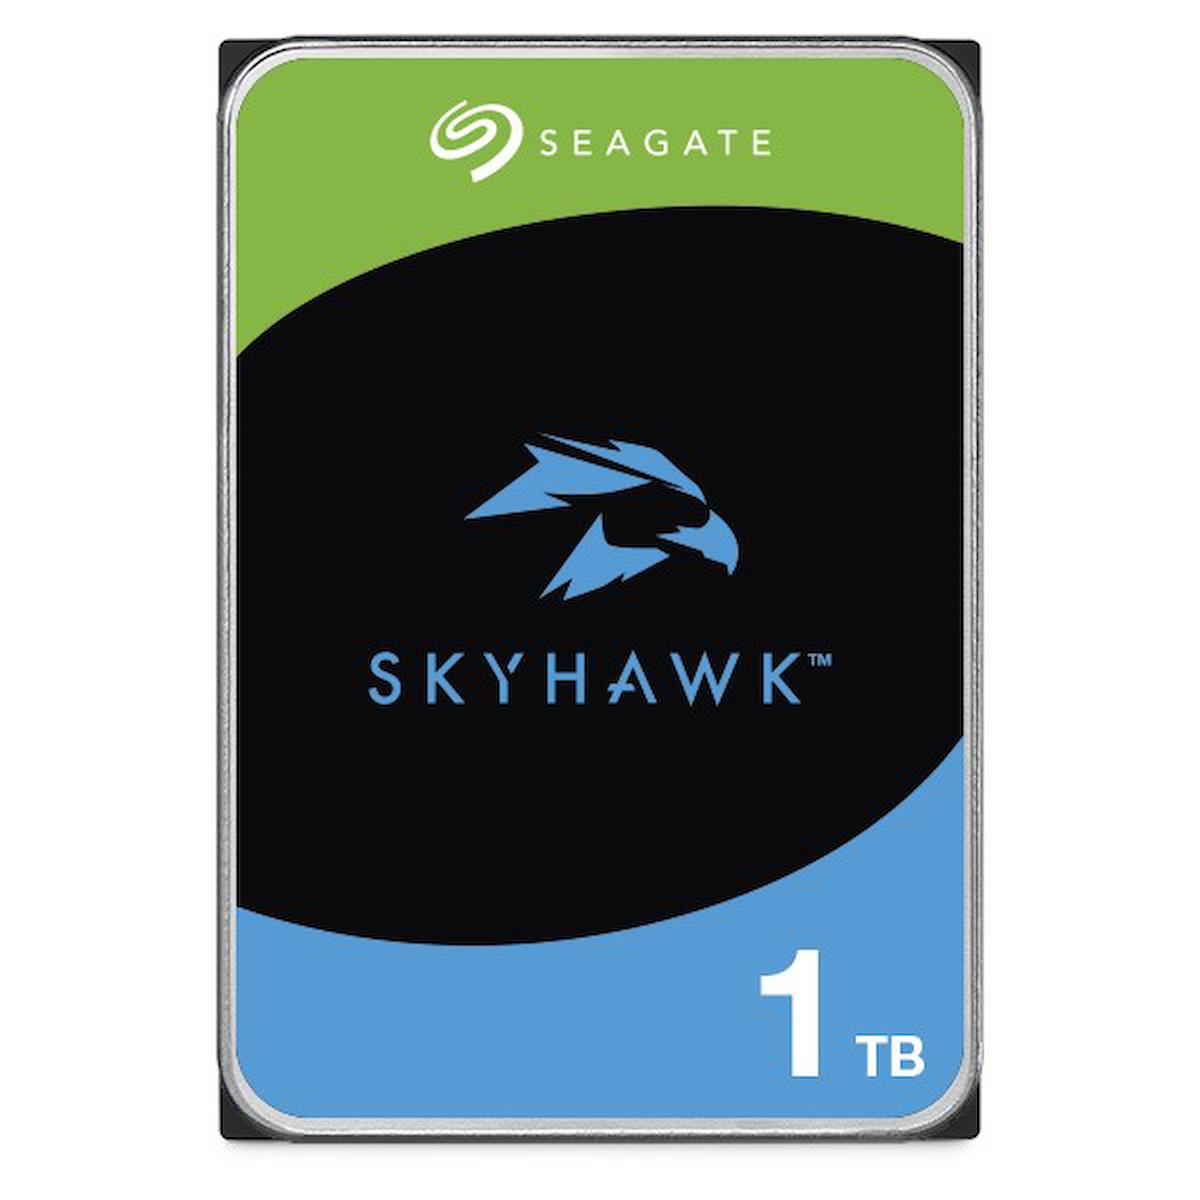 Seagate Skyhawk ST1000VX005 1 TB 3.5 inç 64 MB SATA 3.0 Güvenlik Kamerası Harddisk